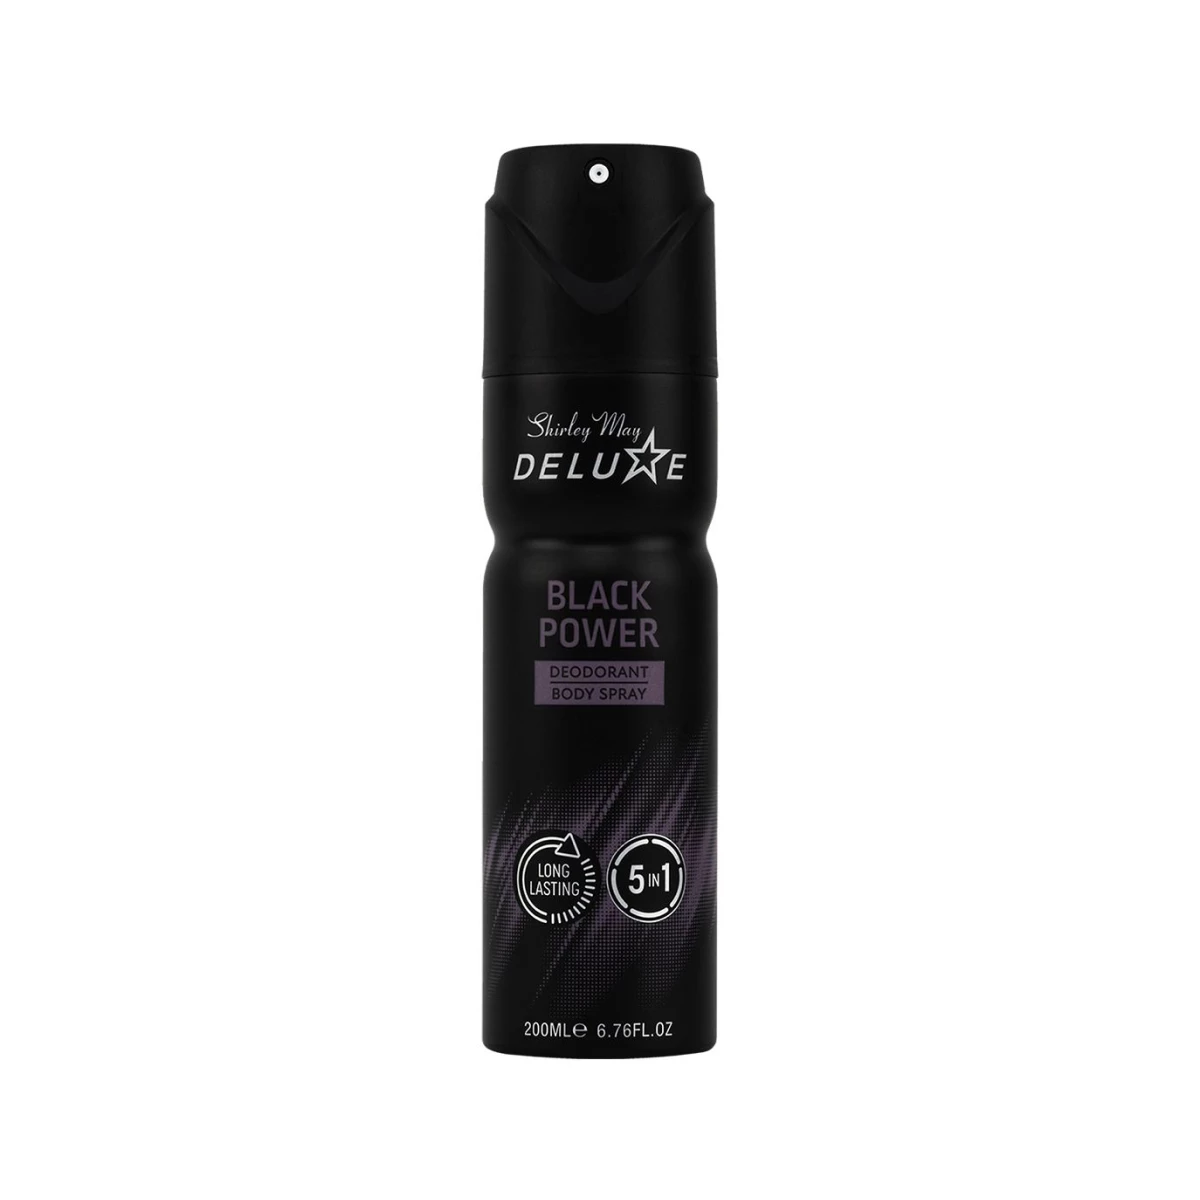 Deodorant Black Power 200ml - Shirley May Deluxe